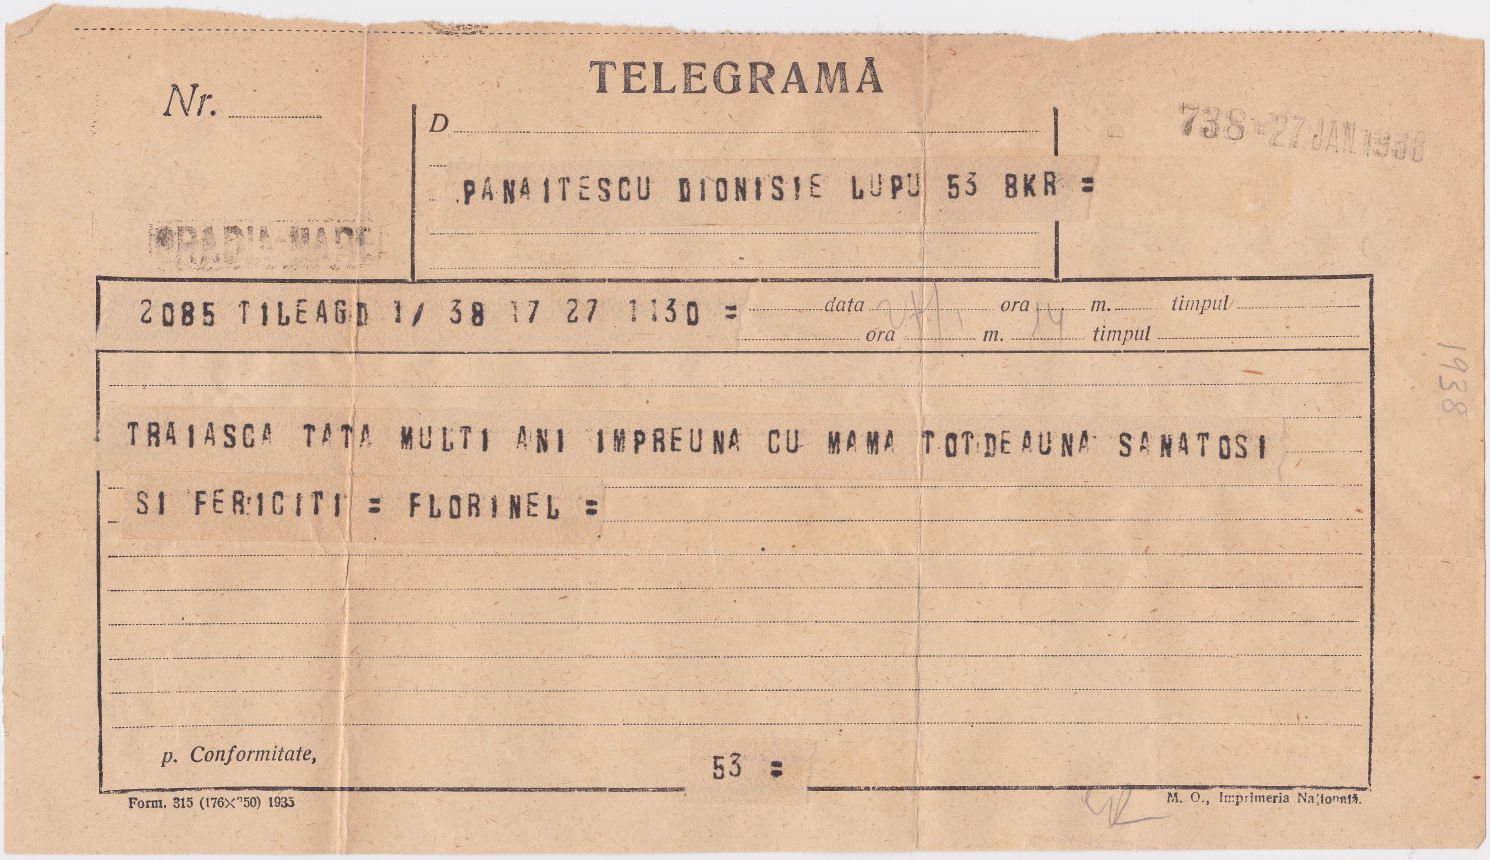 Telegram of 27 January 1938